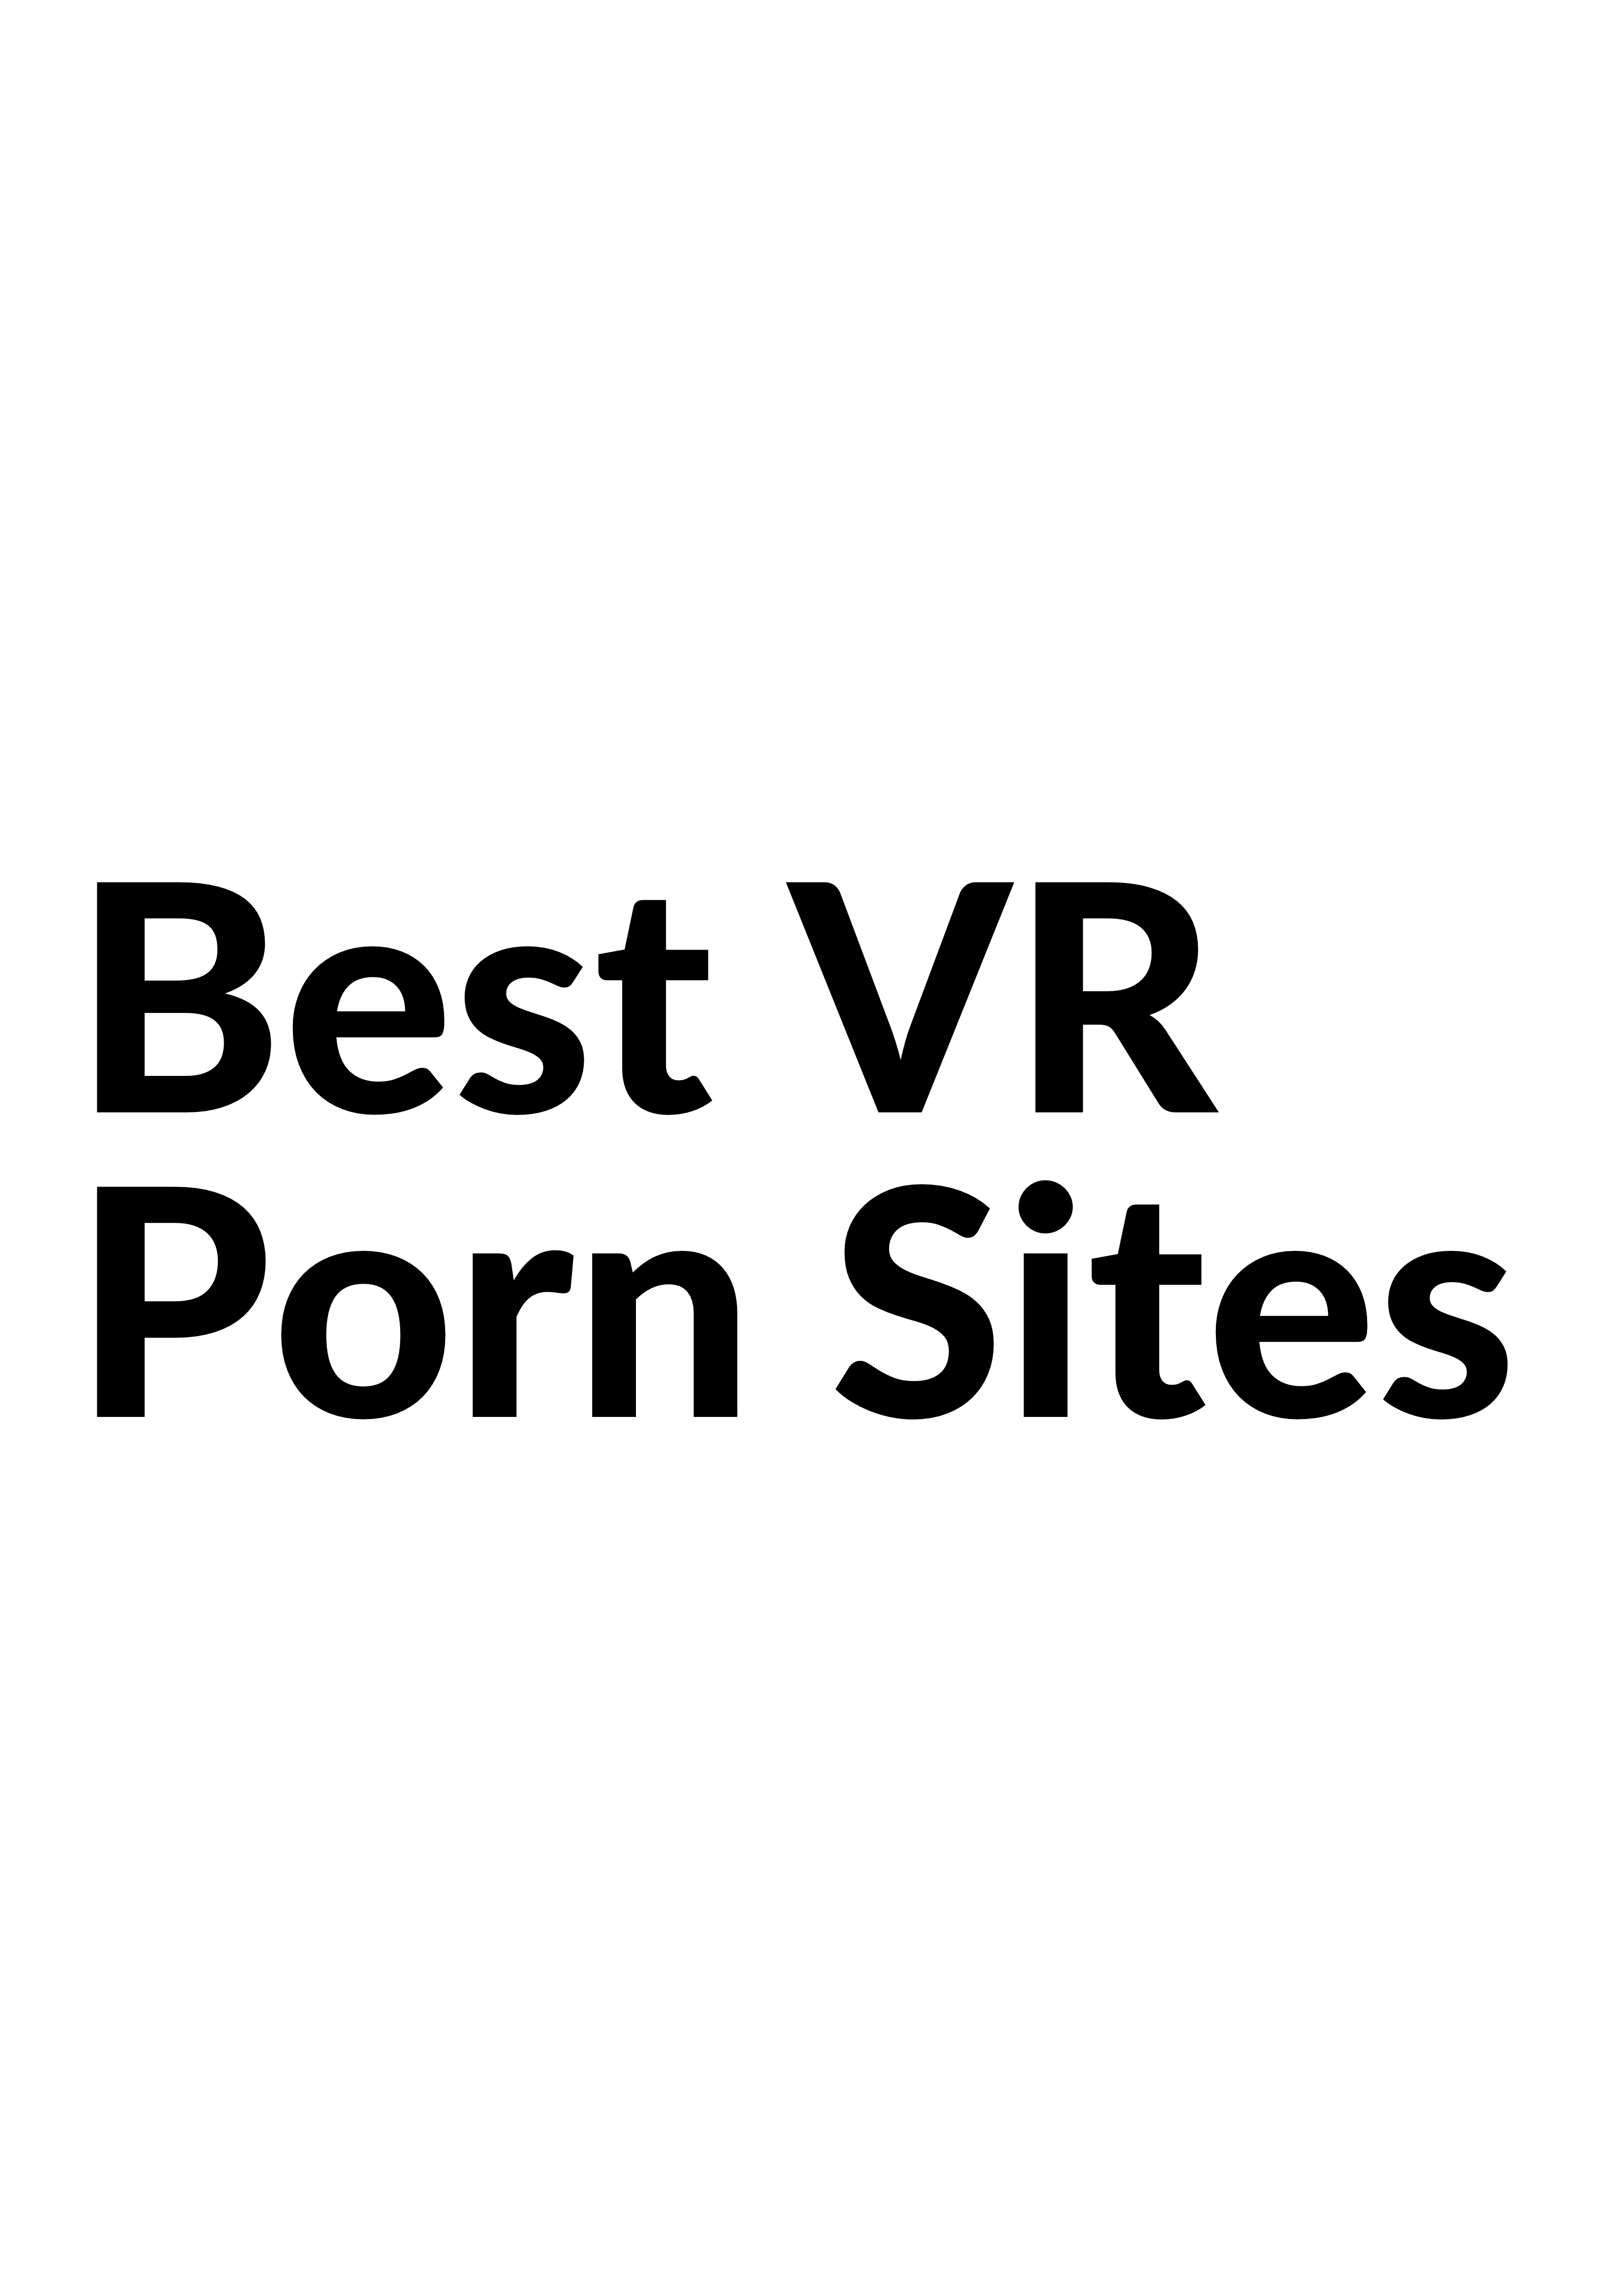 Every Porn Category